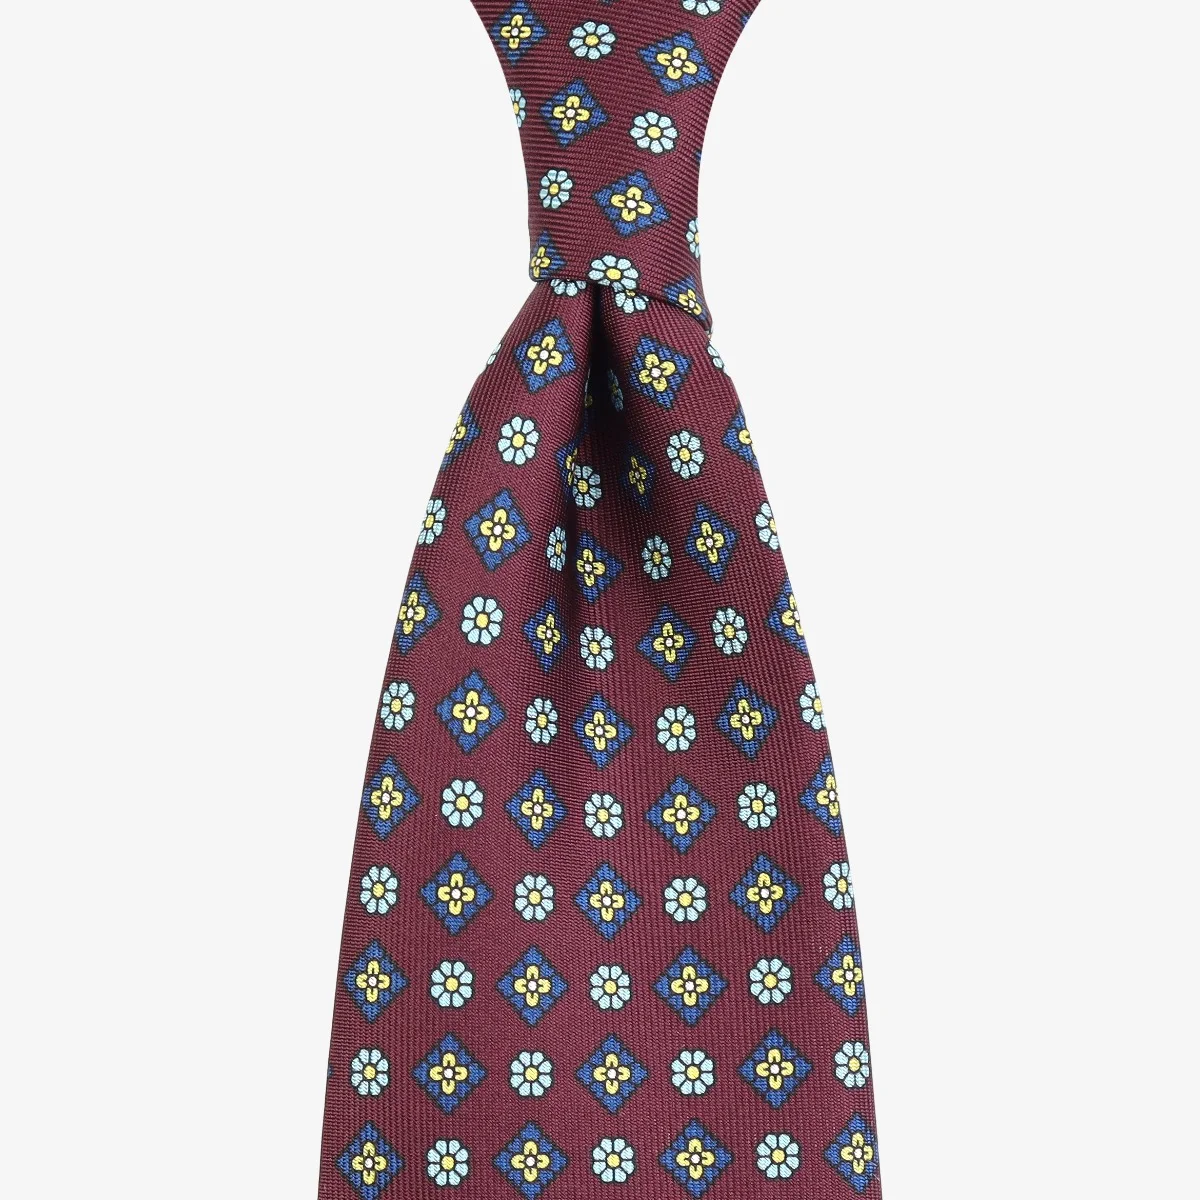 Shibumi Firenze burgundy silk tie with blue floral pattern